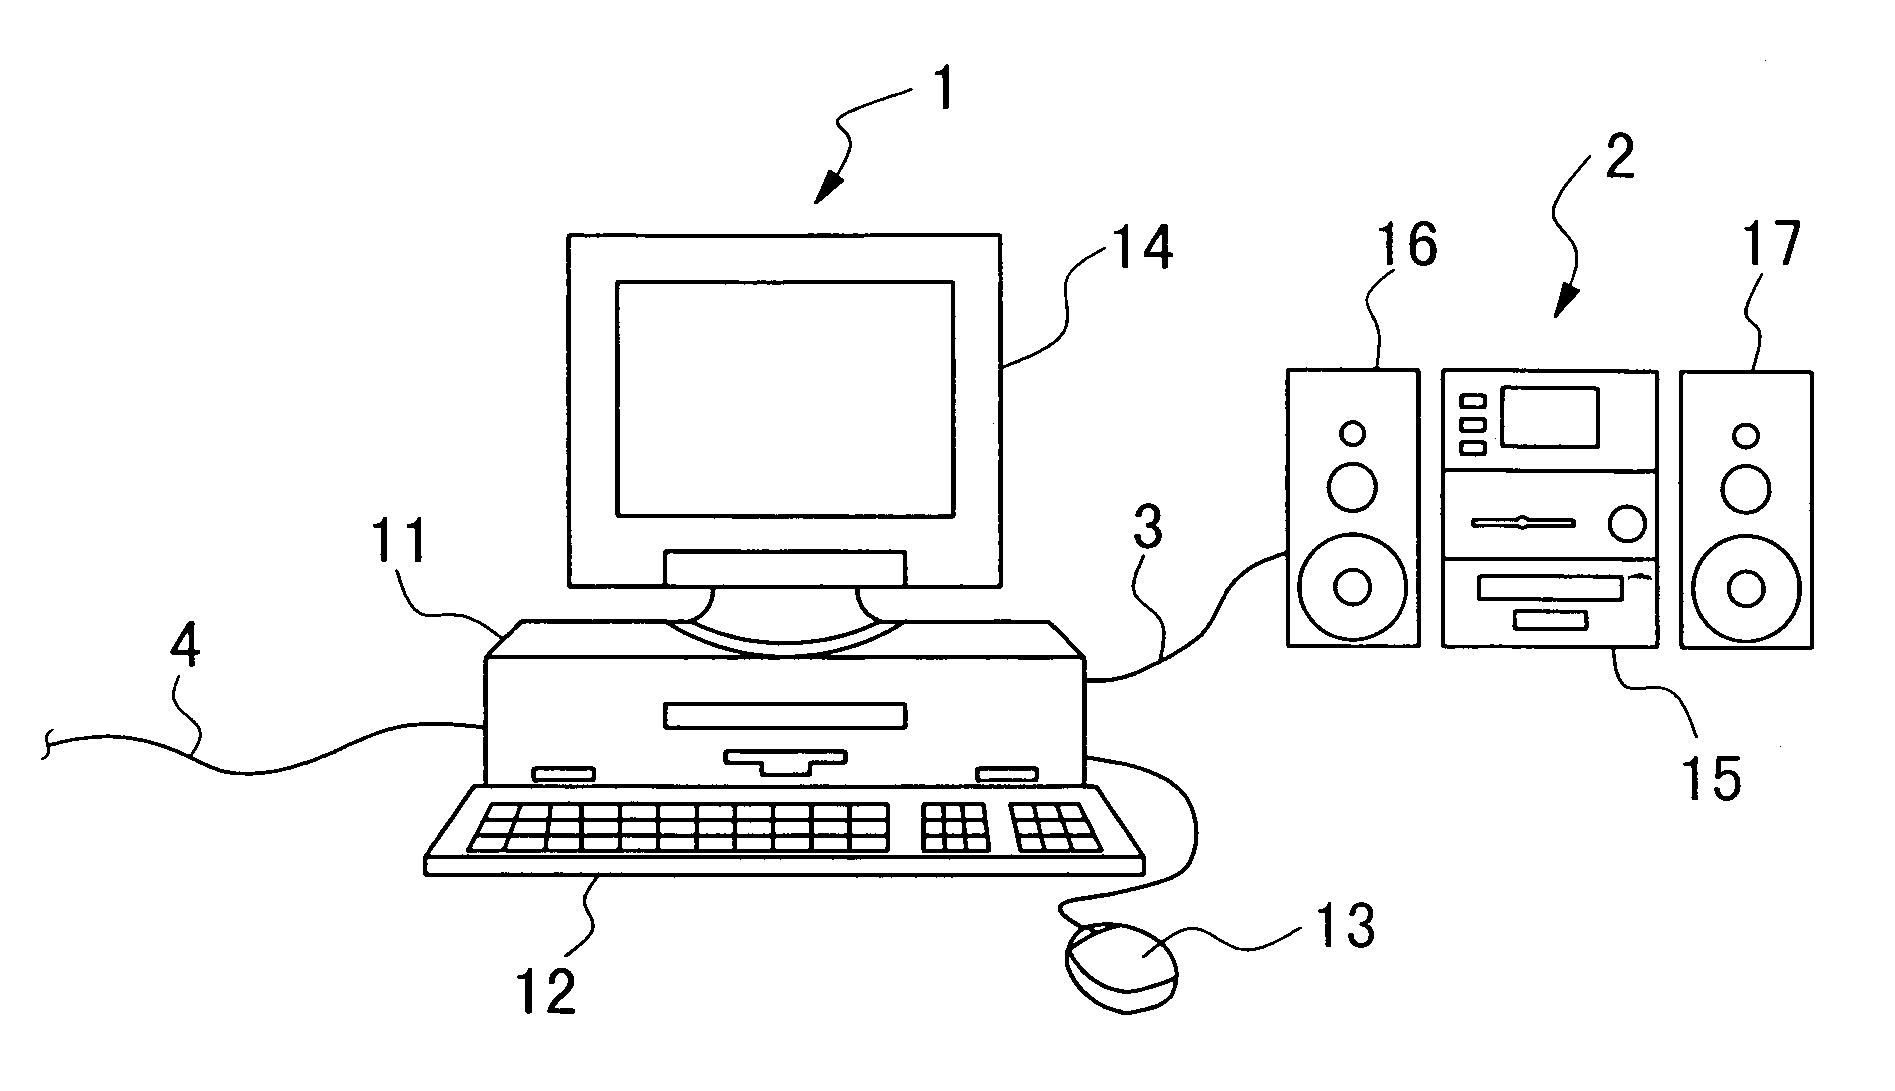 Audio system utilizing personal computer